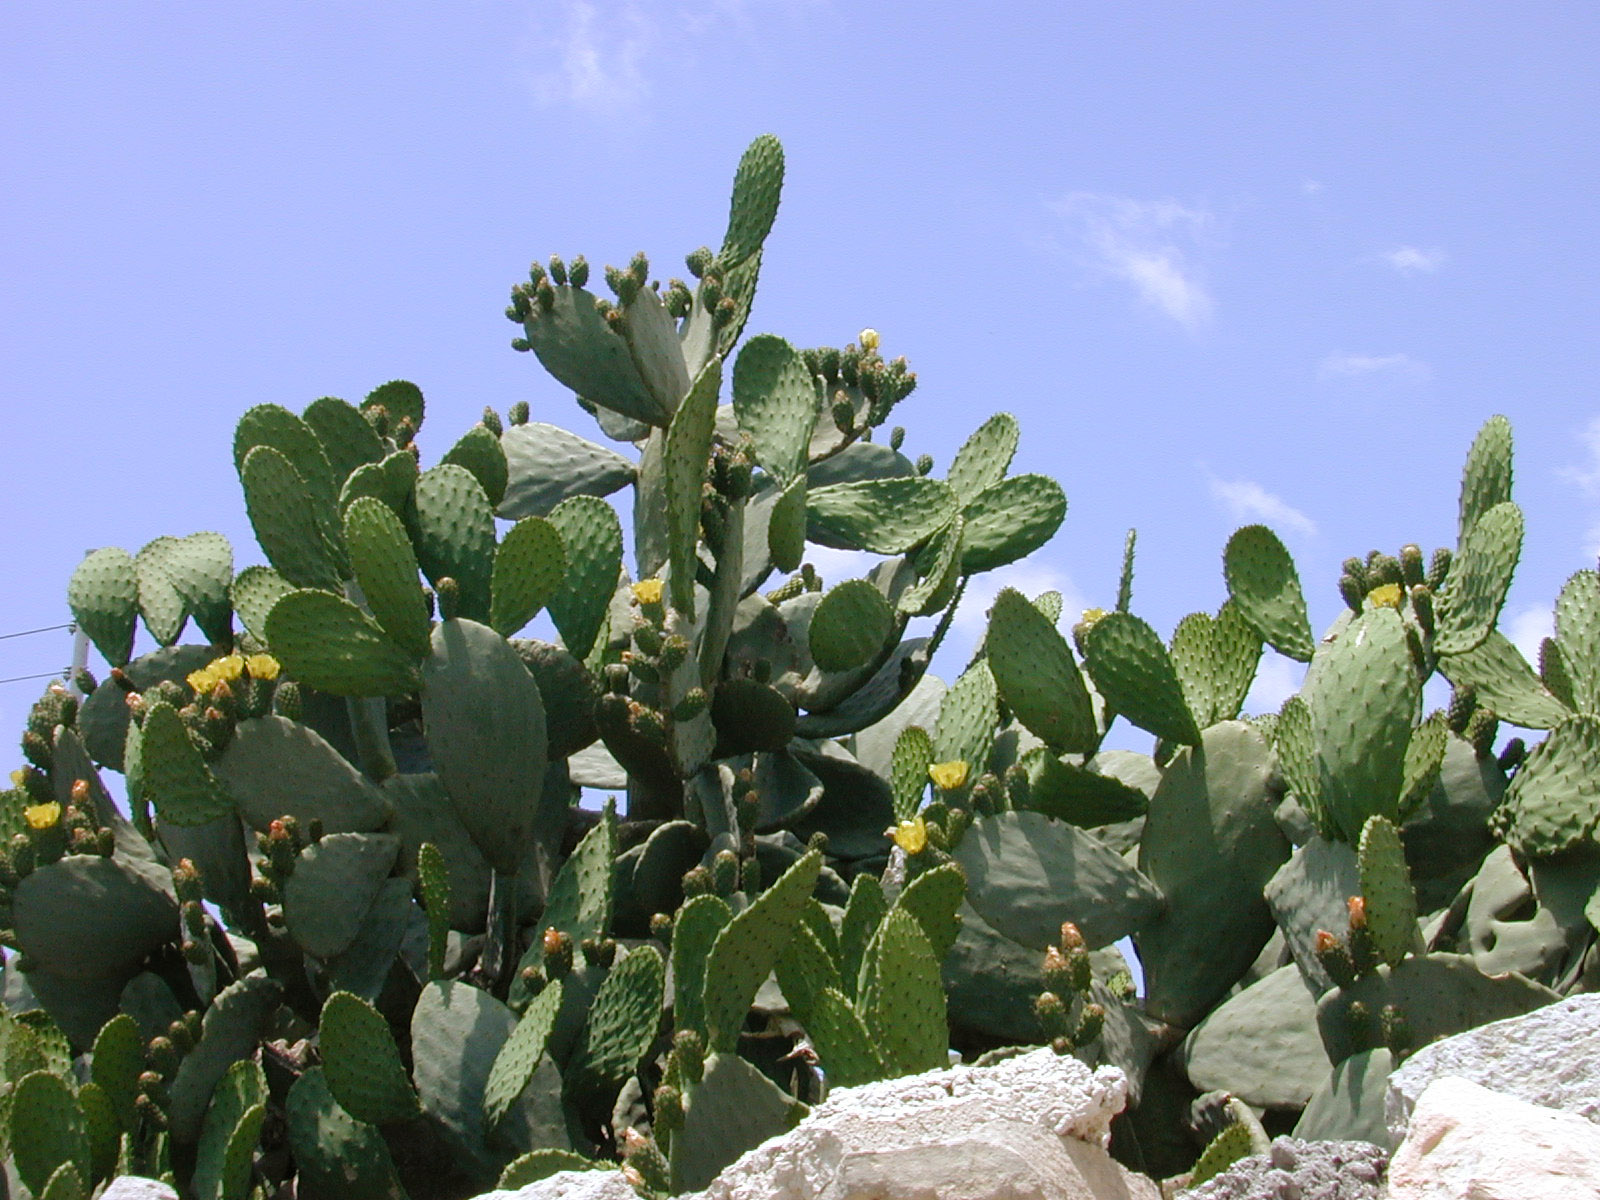 cactus cacti desert hot dry plant plants green warm images